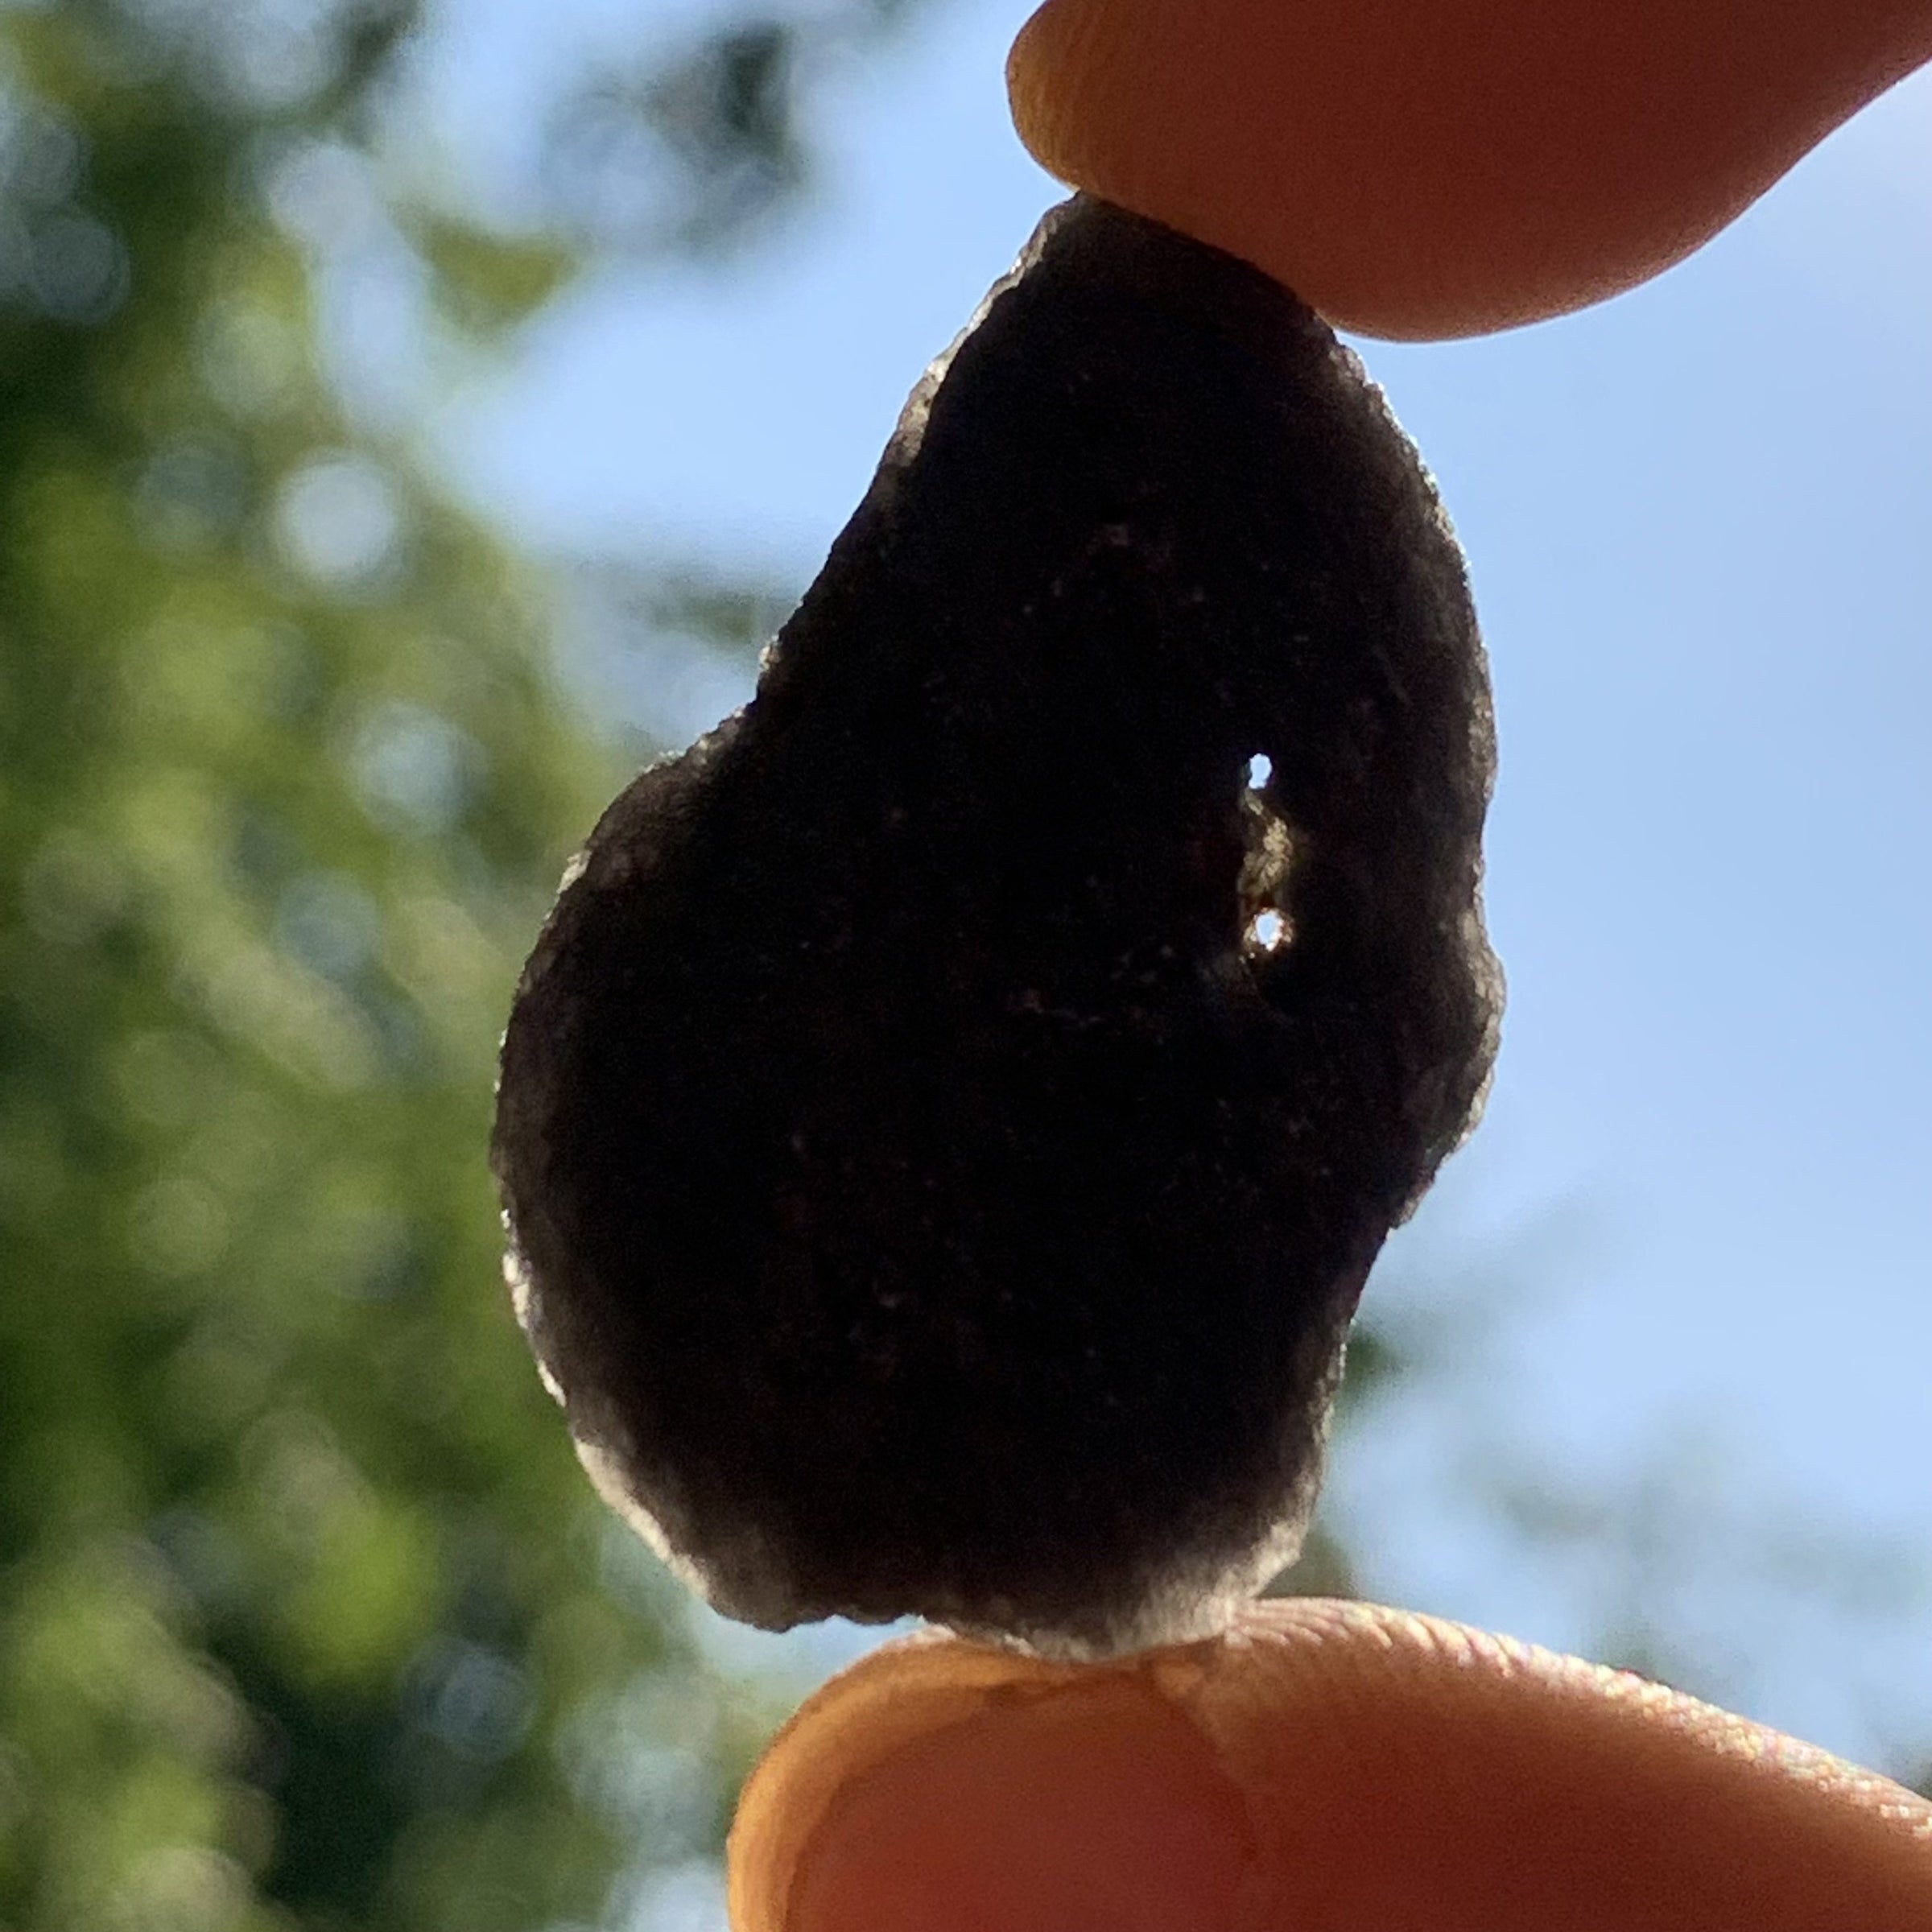 Pearl of Fire Agni Manitite 8.7 grams PF72-Moldavite Life